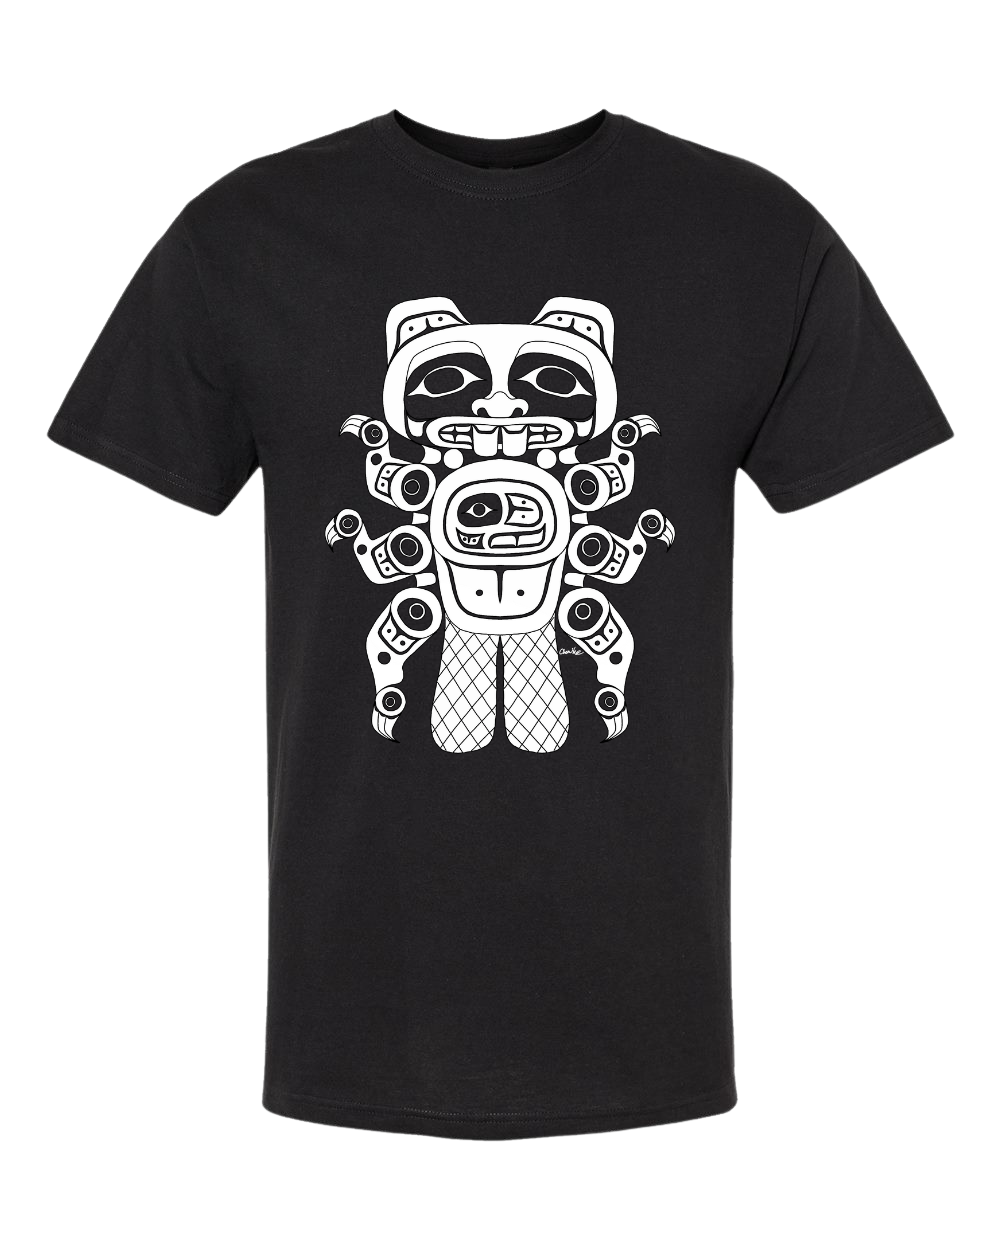 Chanelle Firth-Ward T-Shirt Black